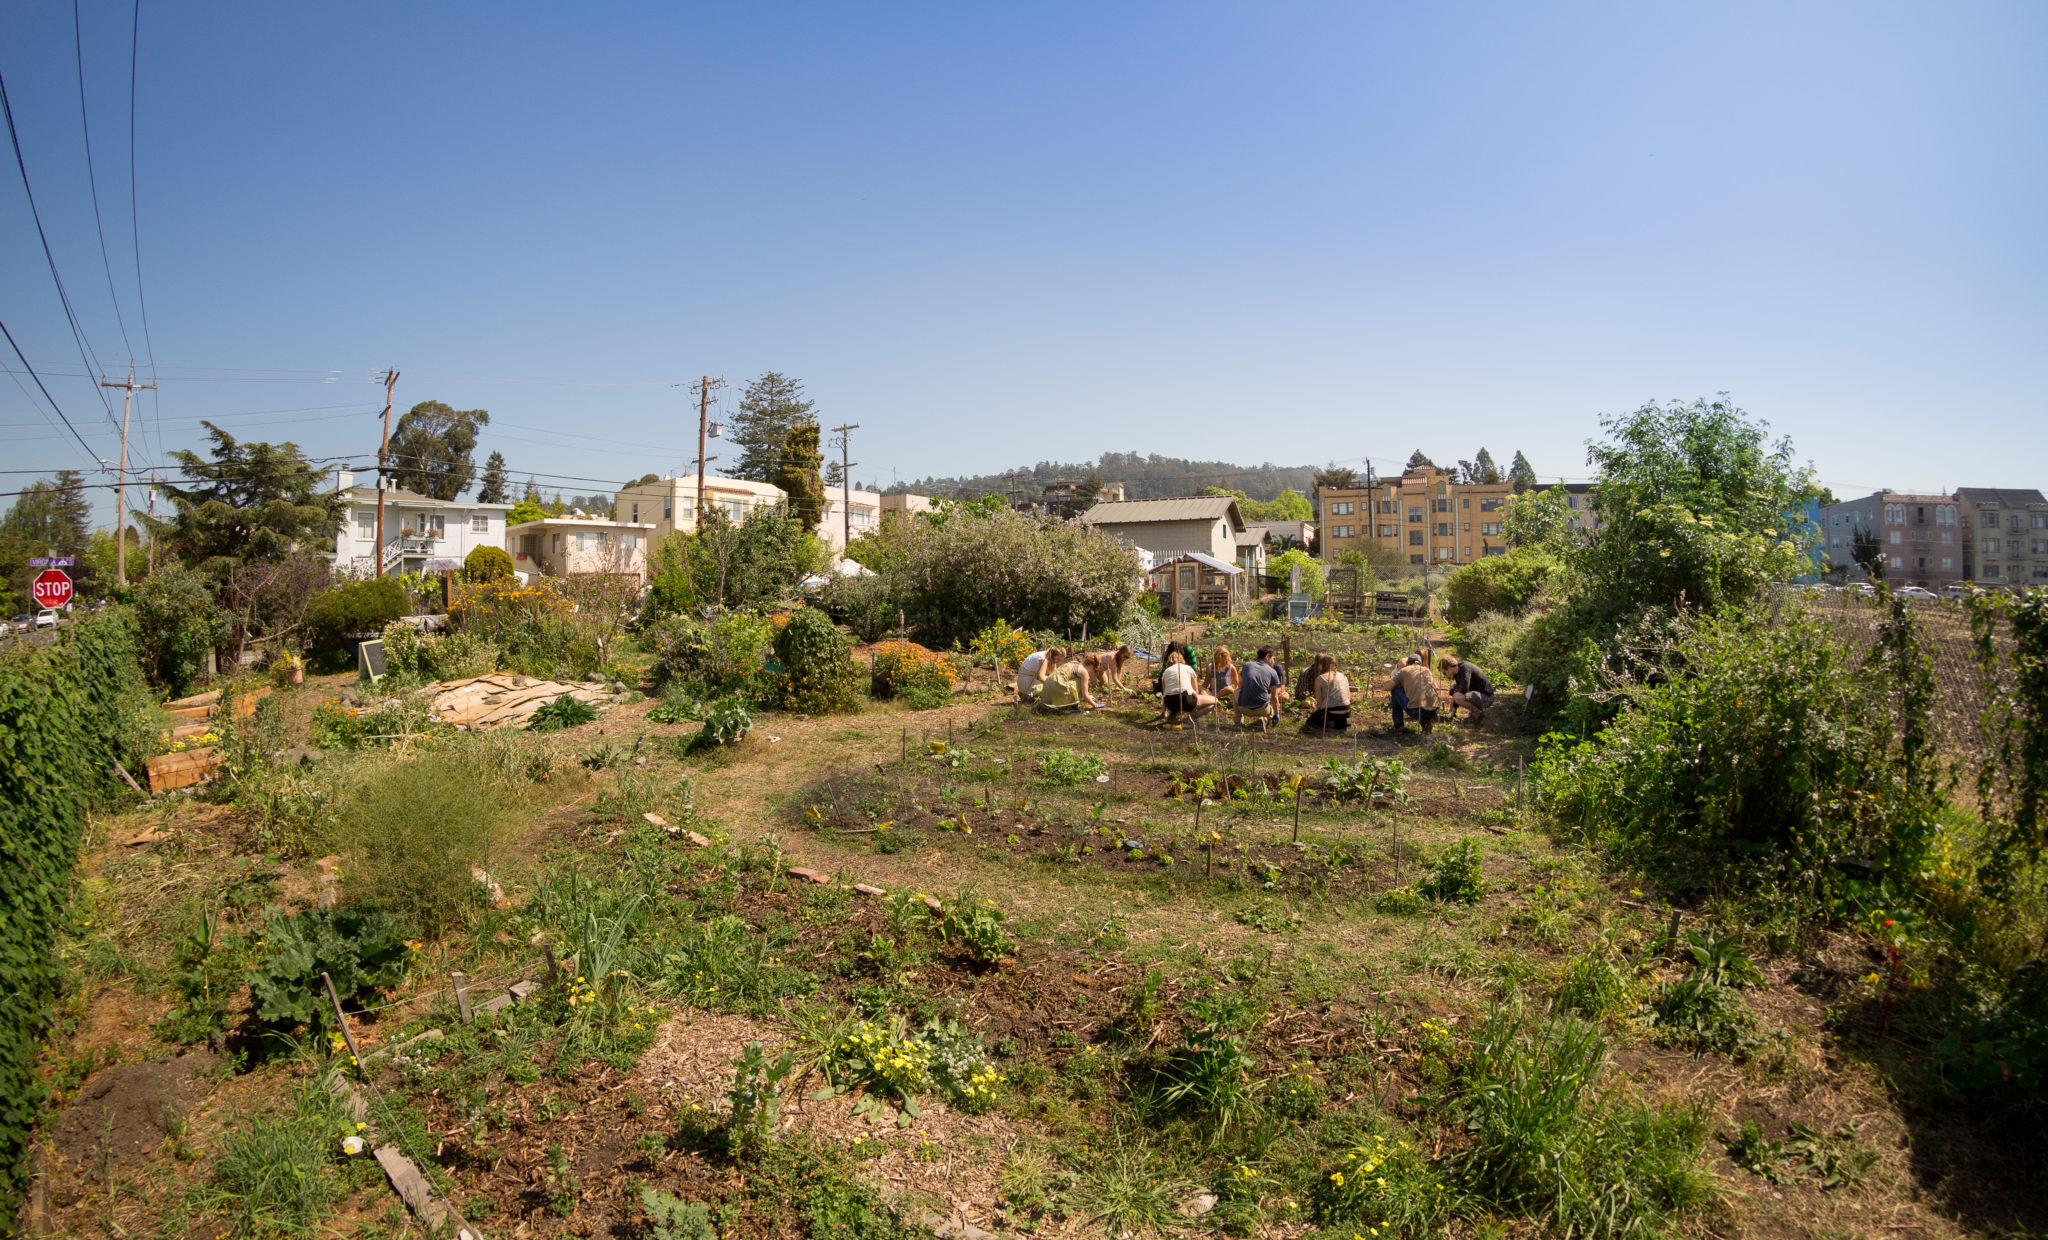 UC Berkeley Student Organic Garden. Photo by: Jonathan Fong